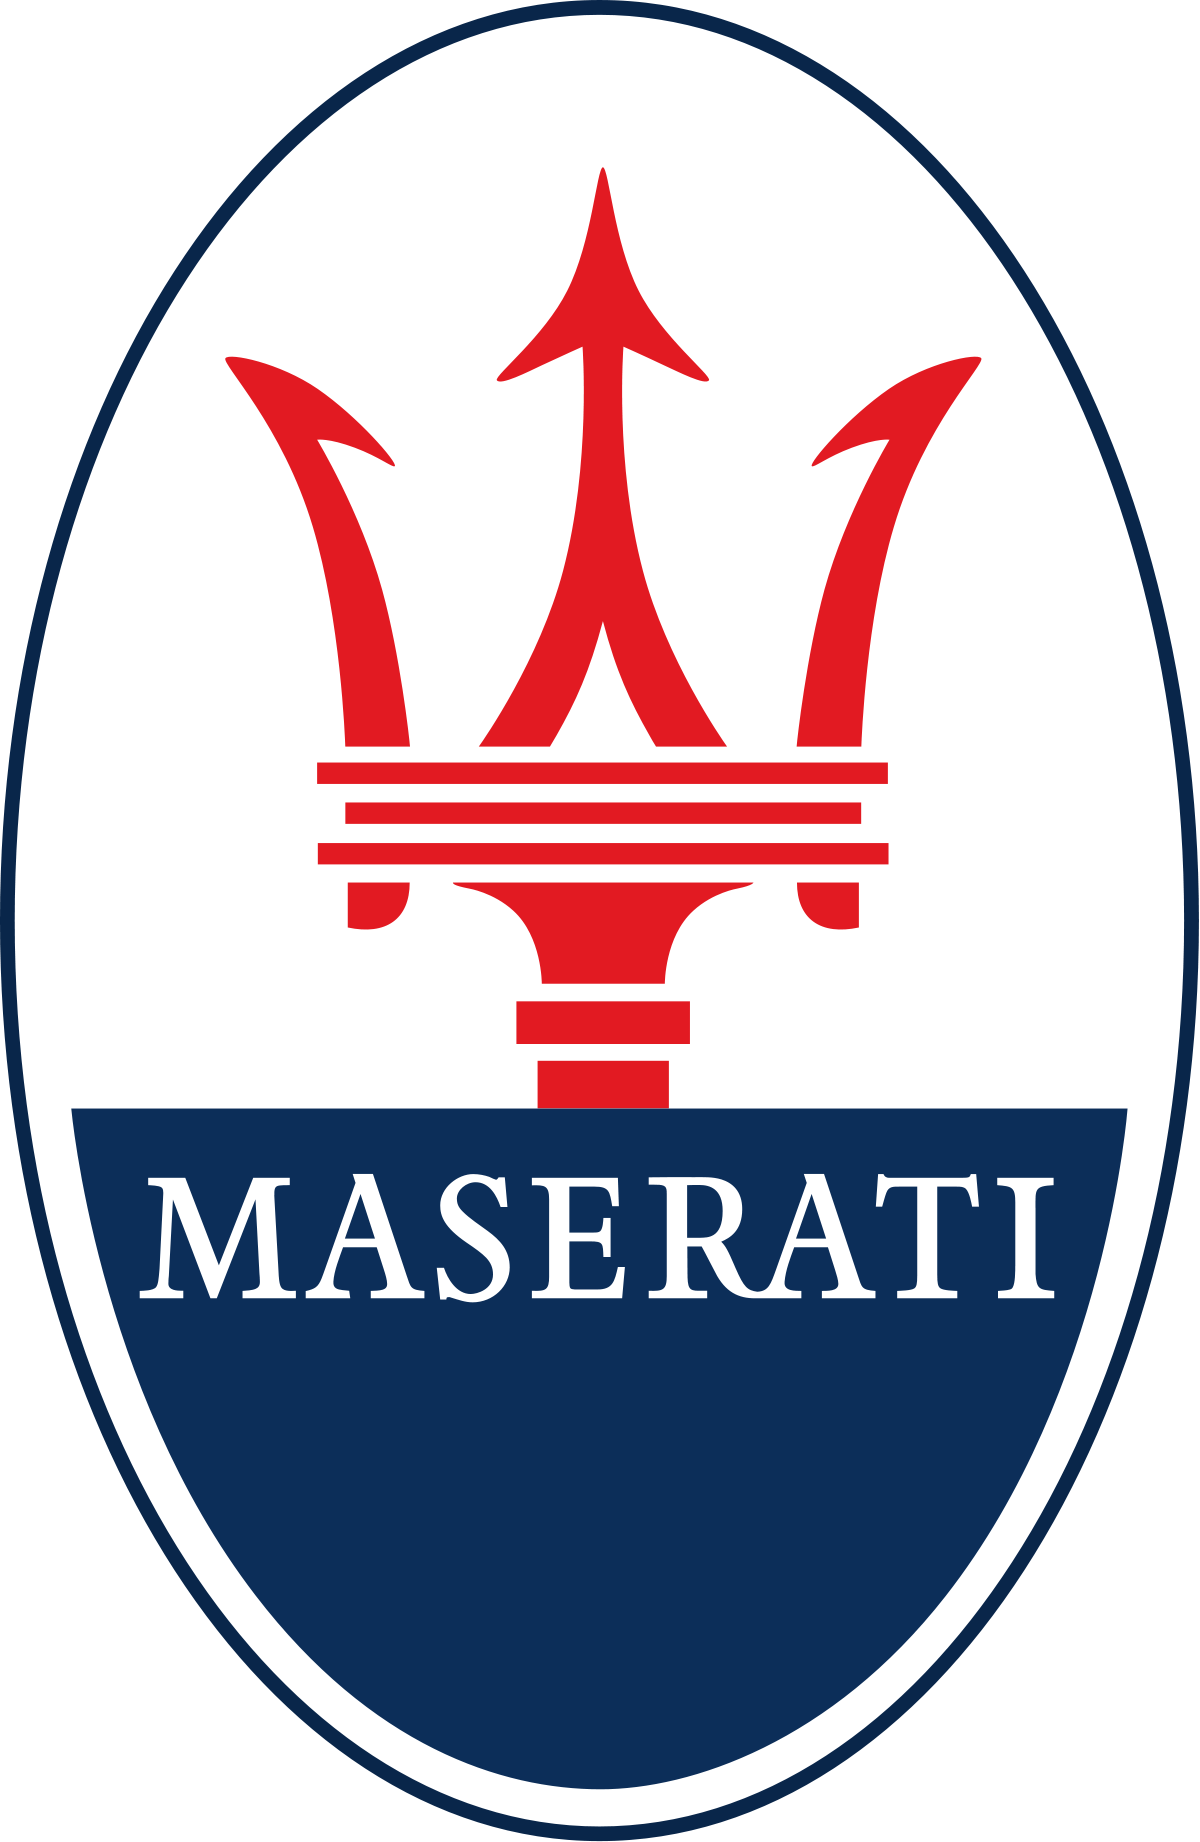 logo-maserati